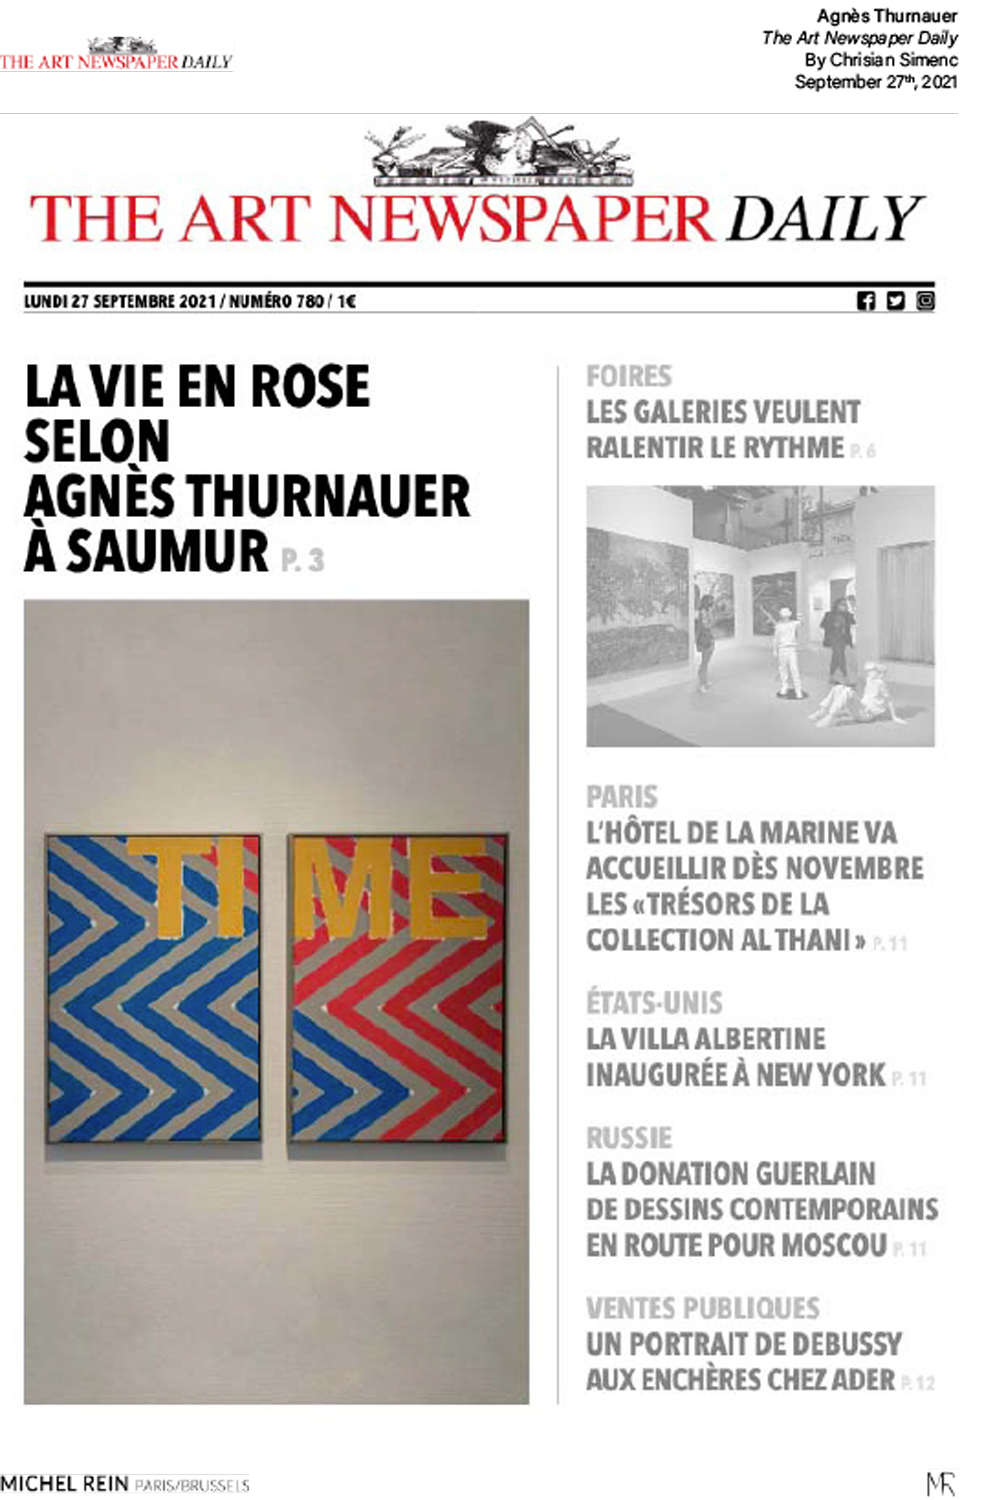 AGNES THURNAUER  - The Art Newspaper